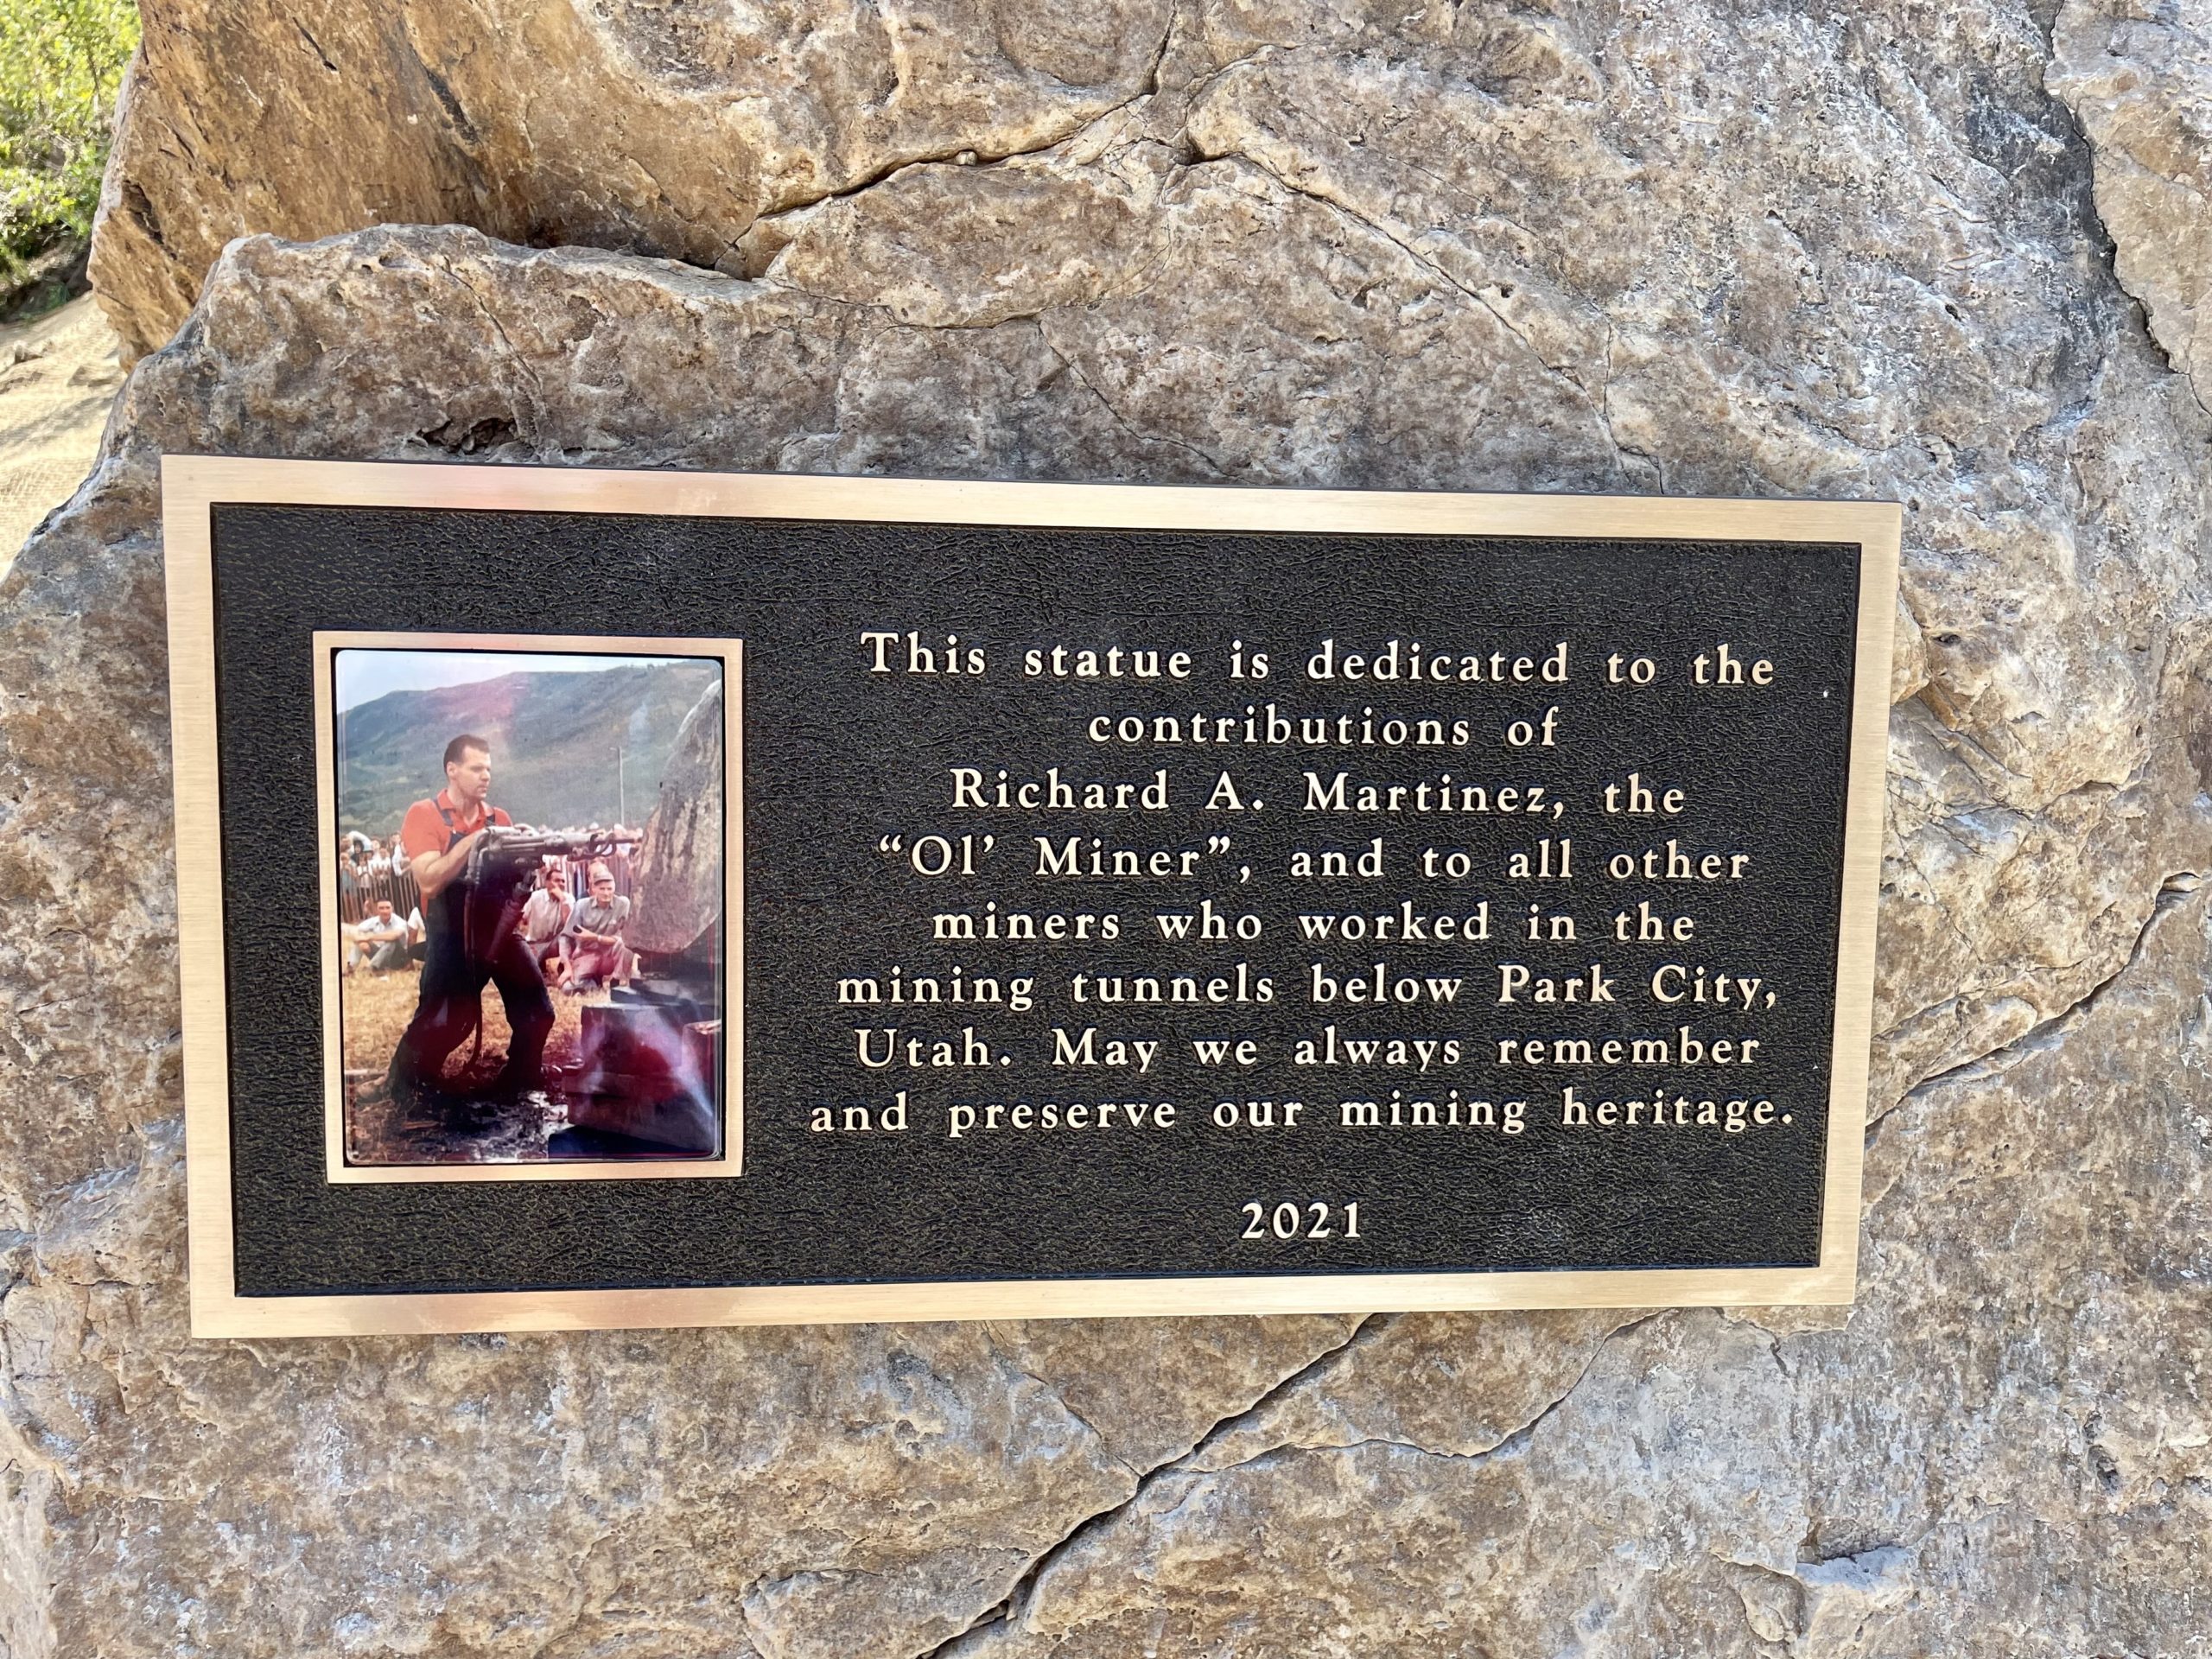 The plaque at the Rich Martinez sculpture.